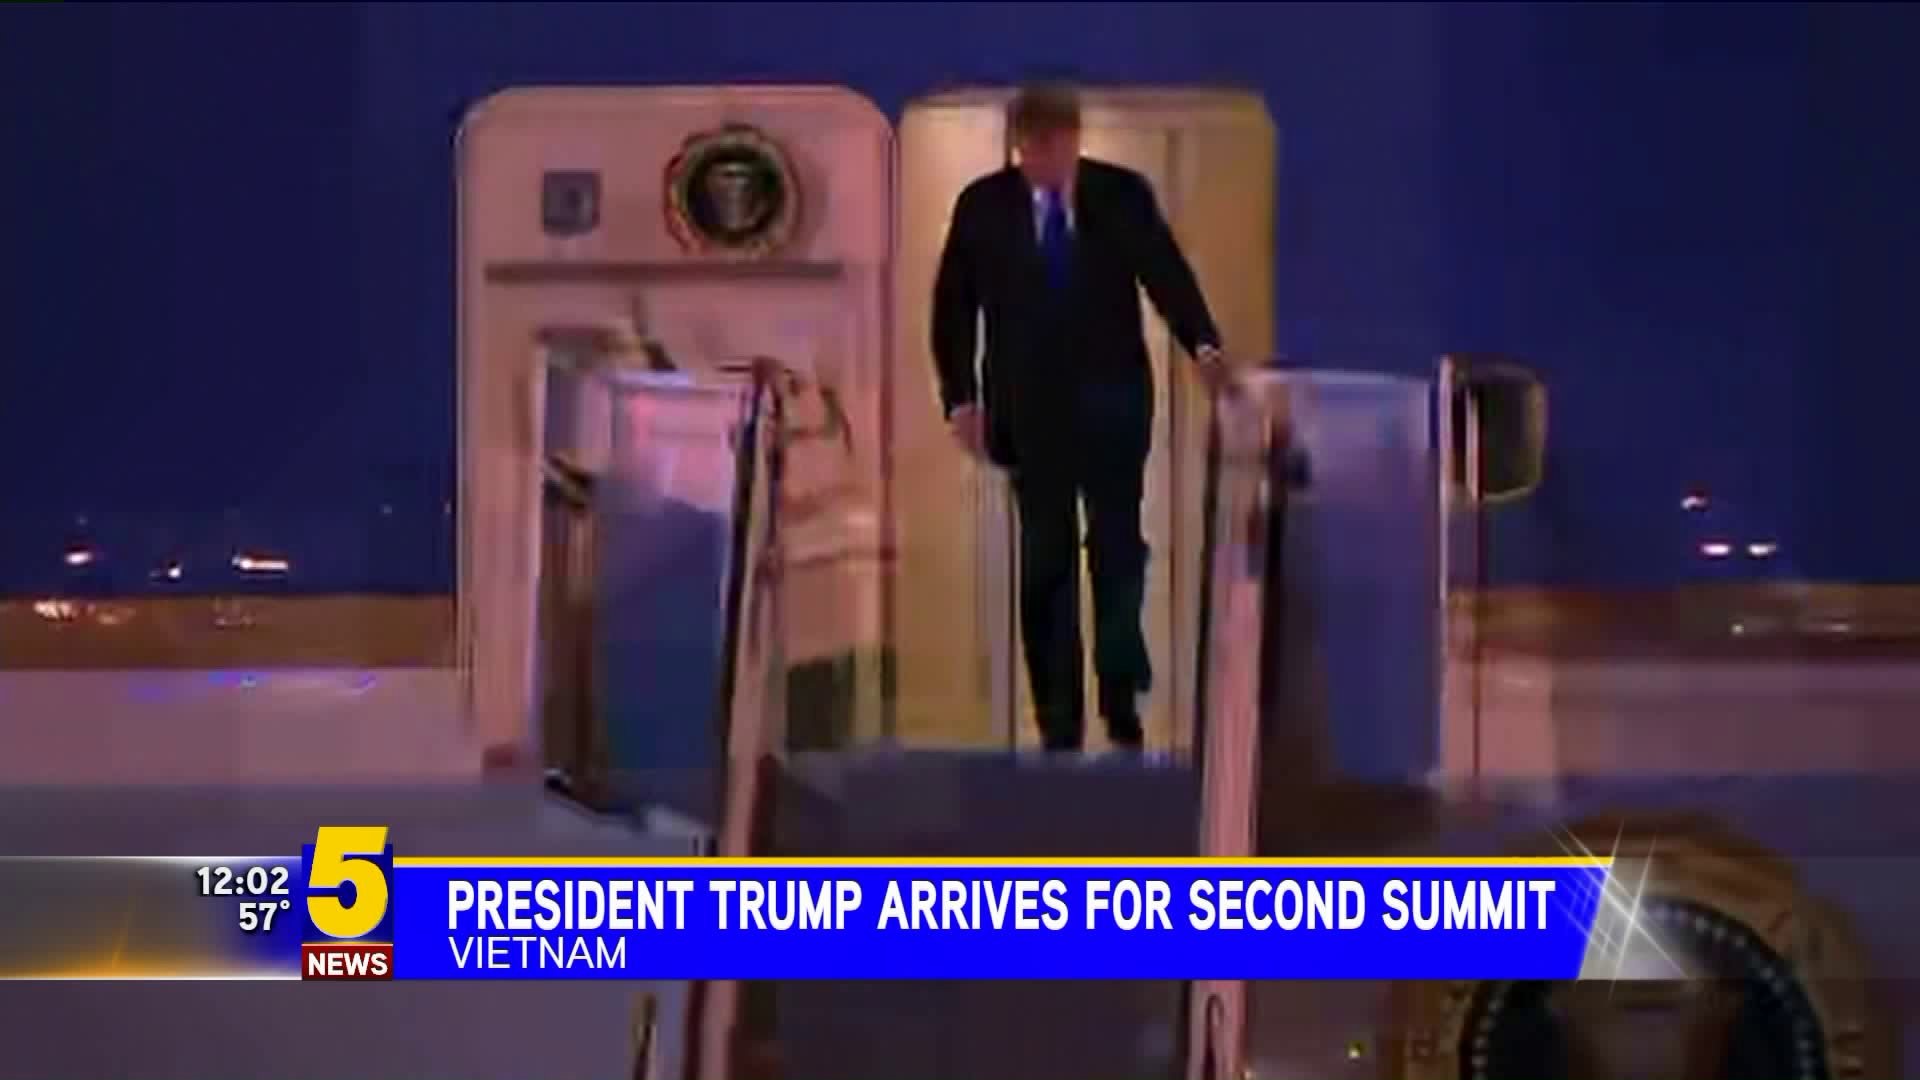 President Trump Arrives For Second Summit in Vietnam